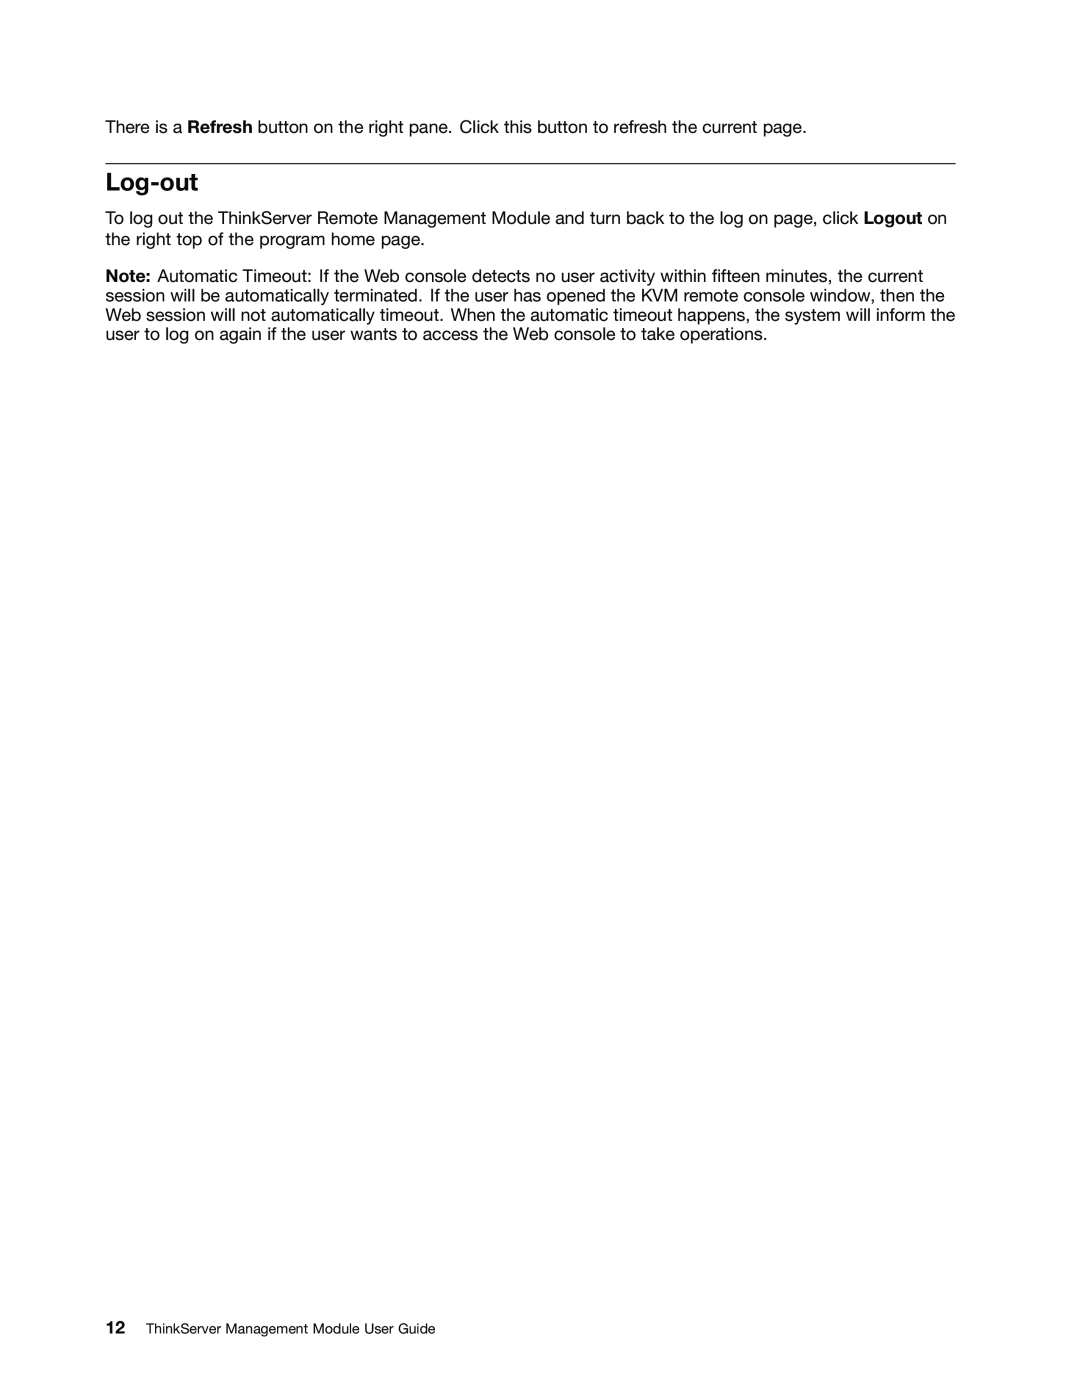 Lenovo RD330, RD630, RD530 manual Log-out, 12ThinkServer Management Module User Guide 